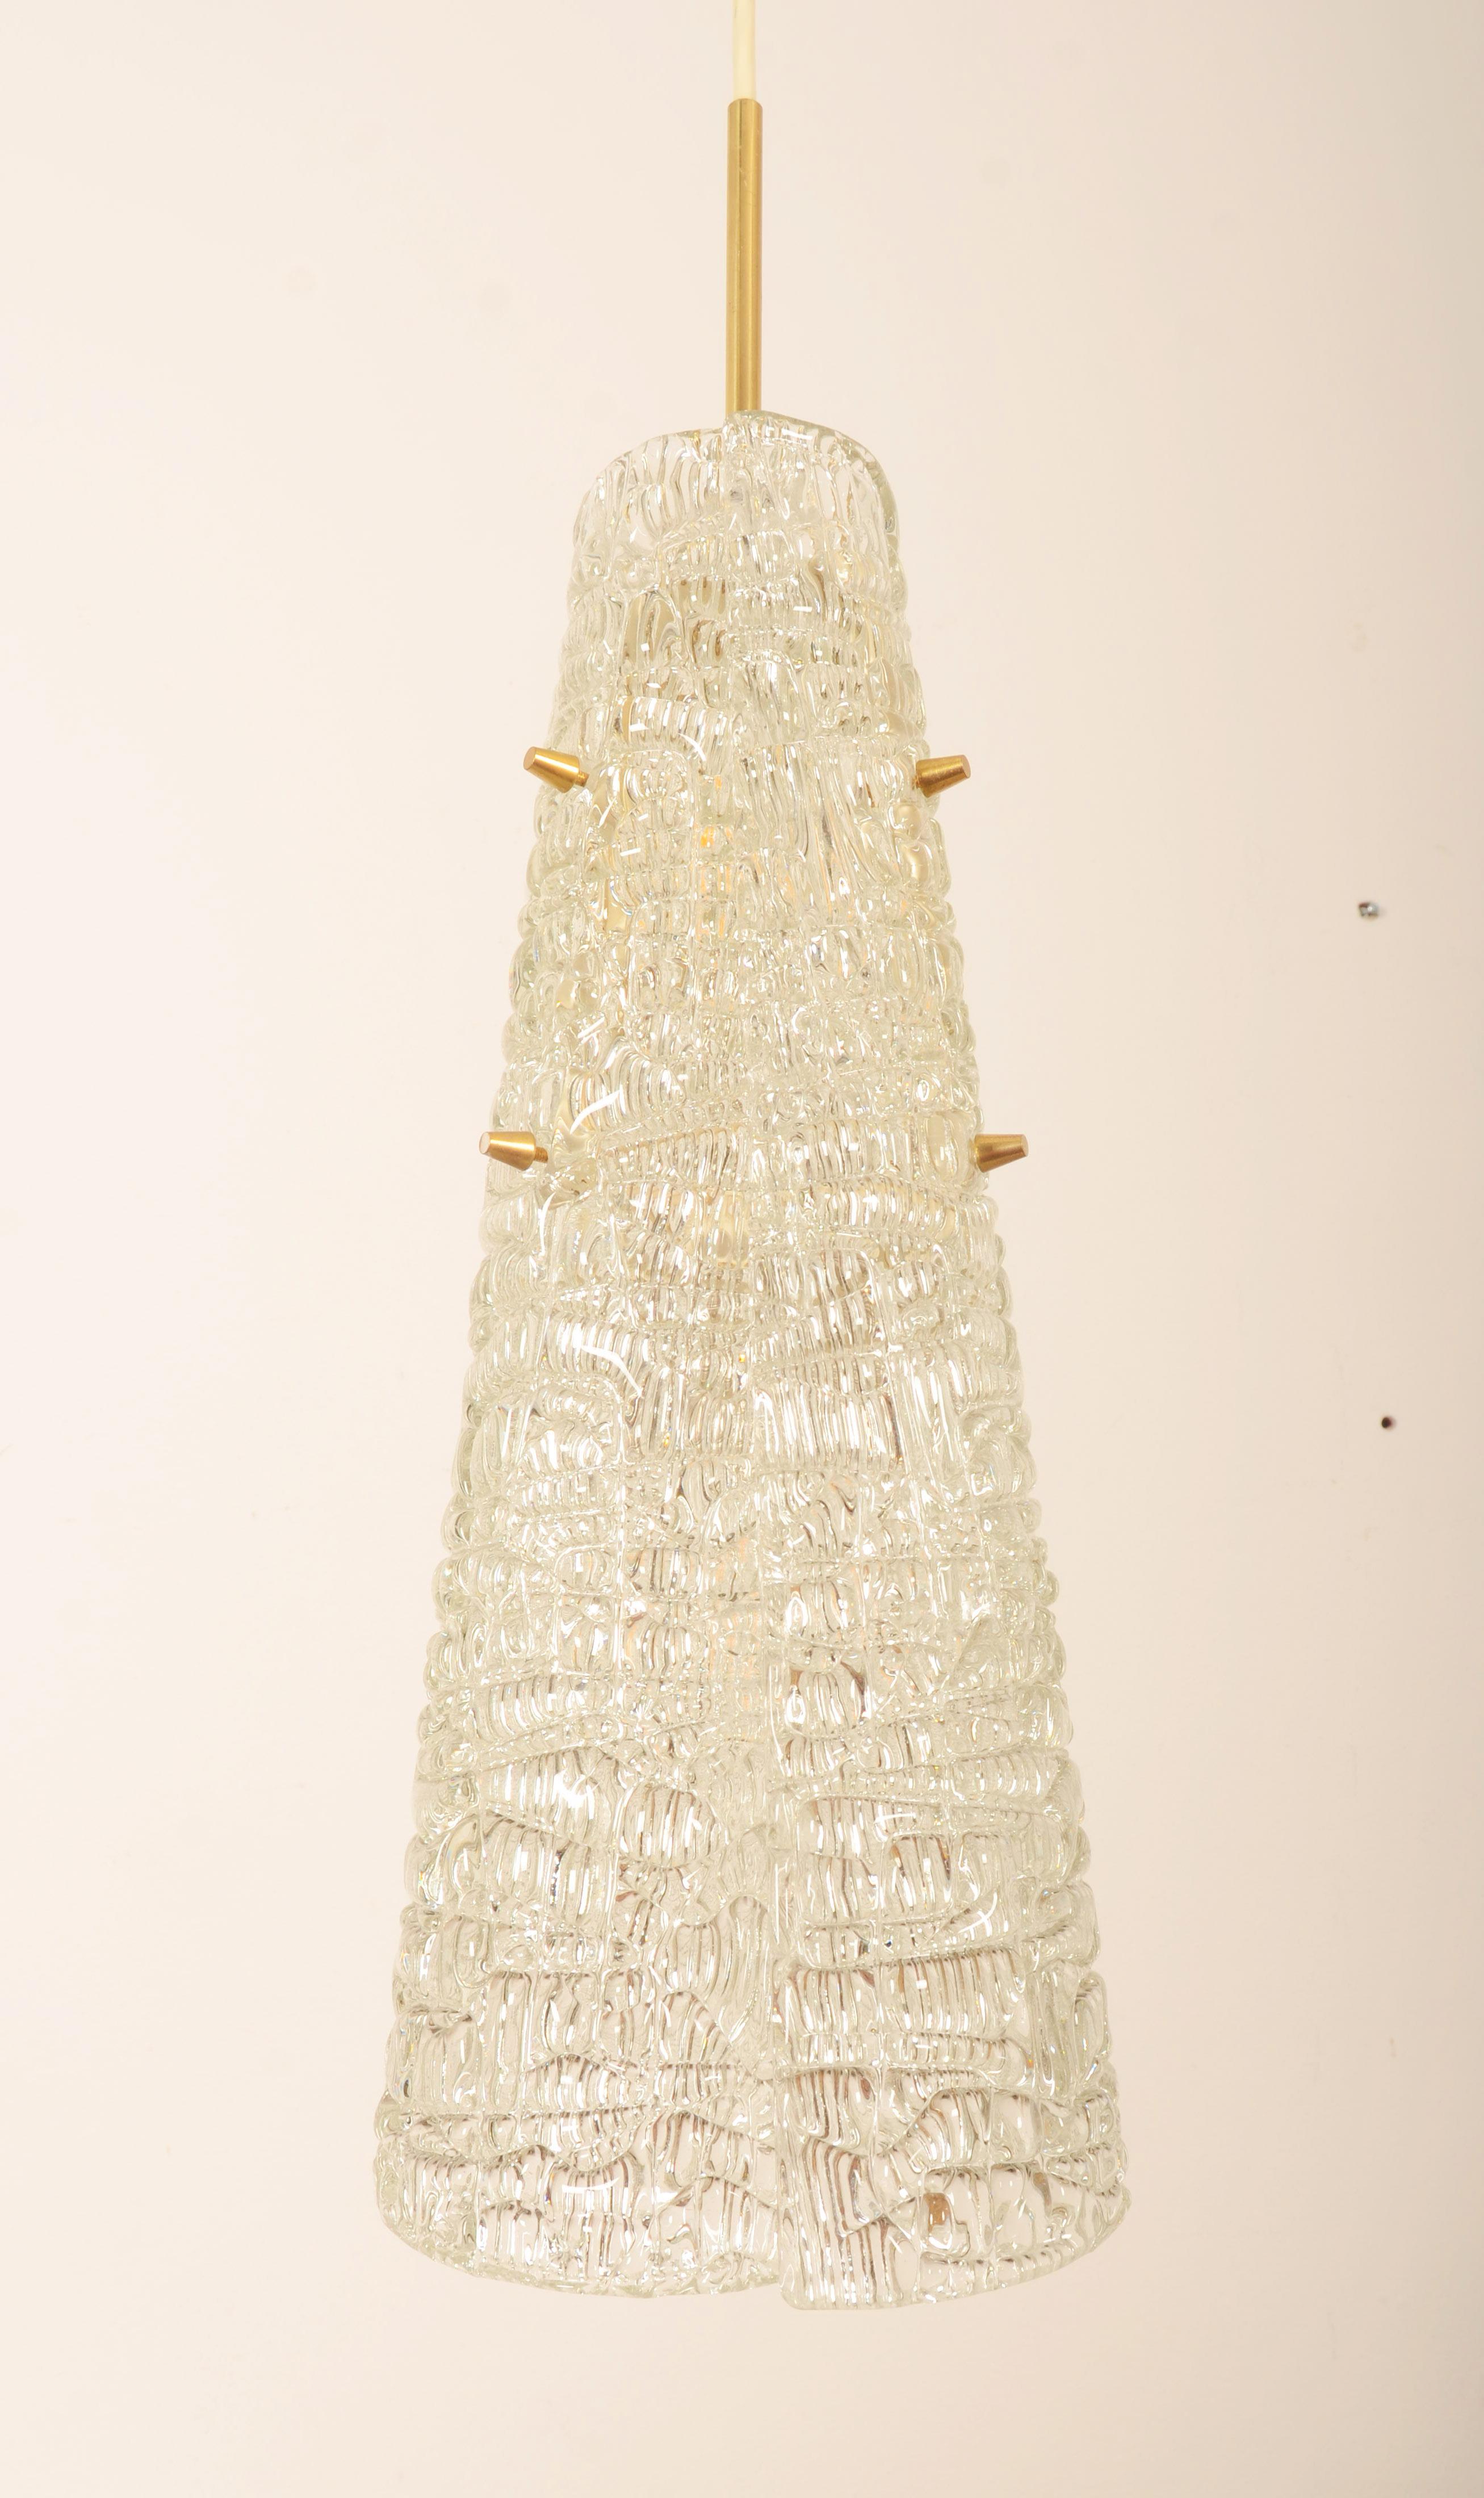 Midcentury J.T. Kalmar Crystal Glass Pendant Lamp For Sale 2